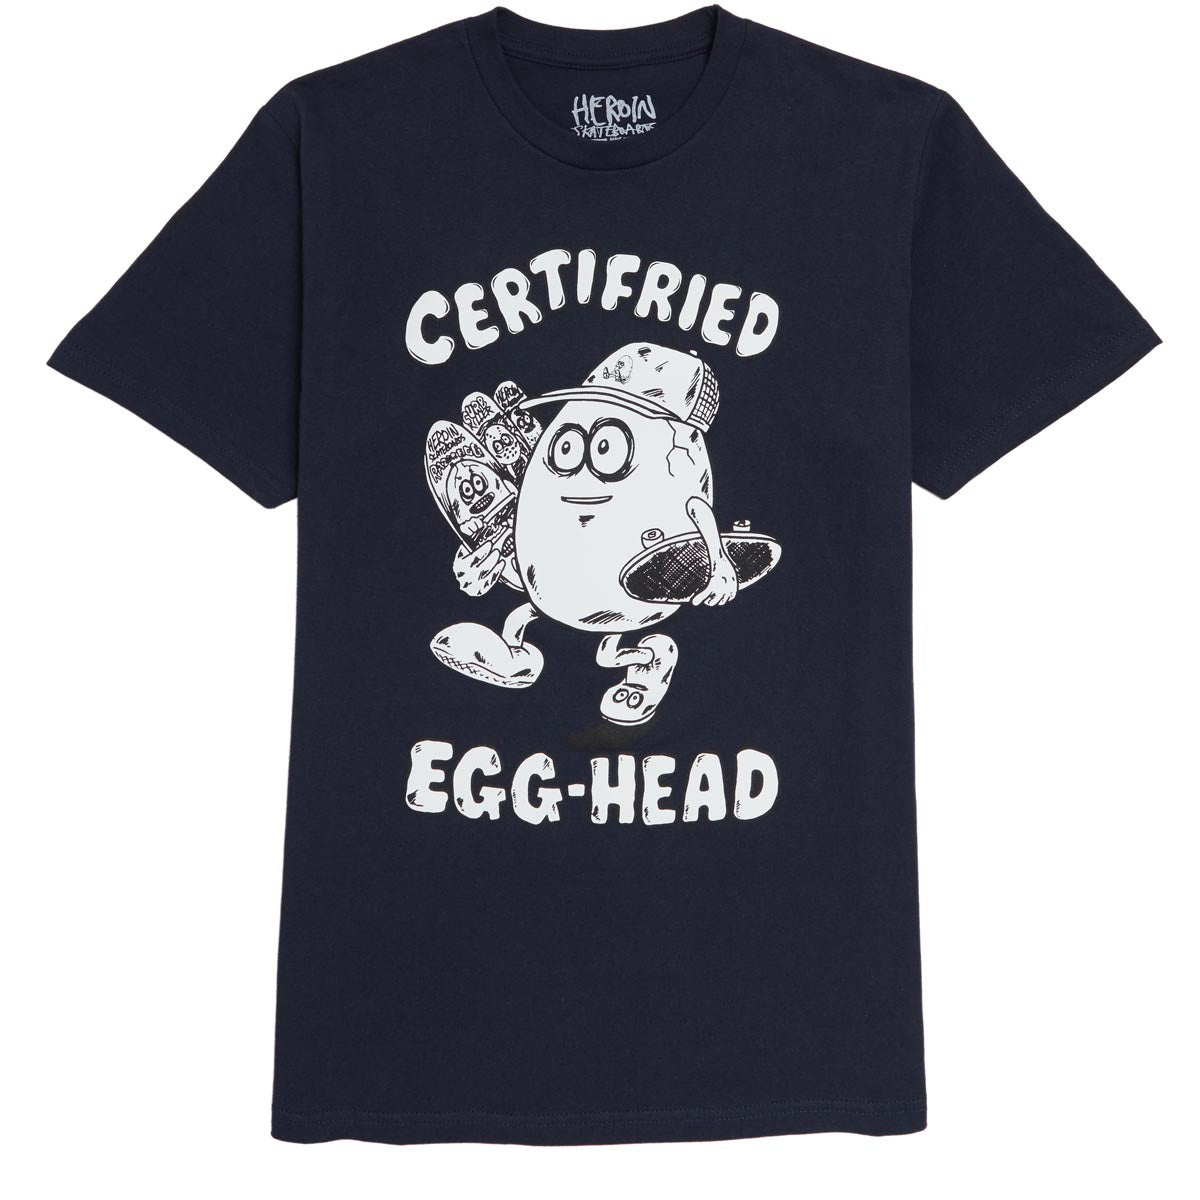 Heroin Certified Egg Head T-Shirt - Navy image 1